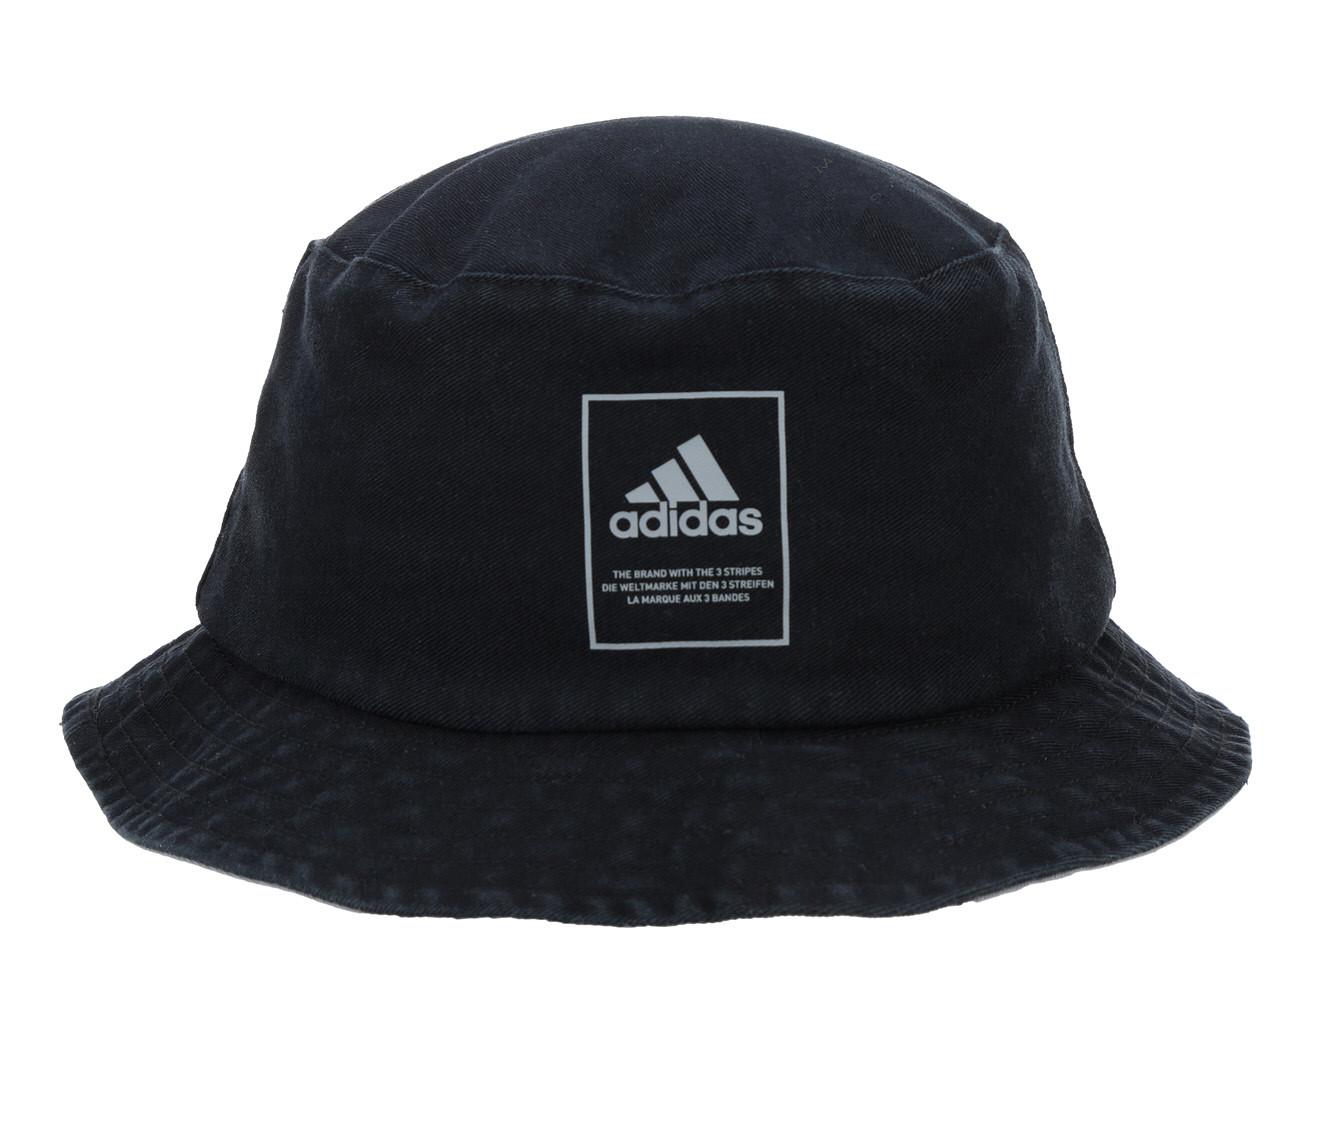 Adidas Men's Lifestyle Sustainable Bucket Hat